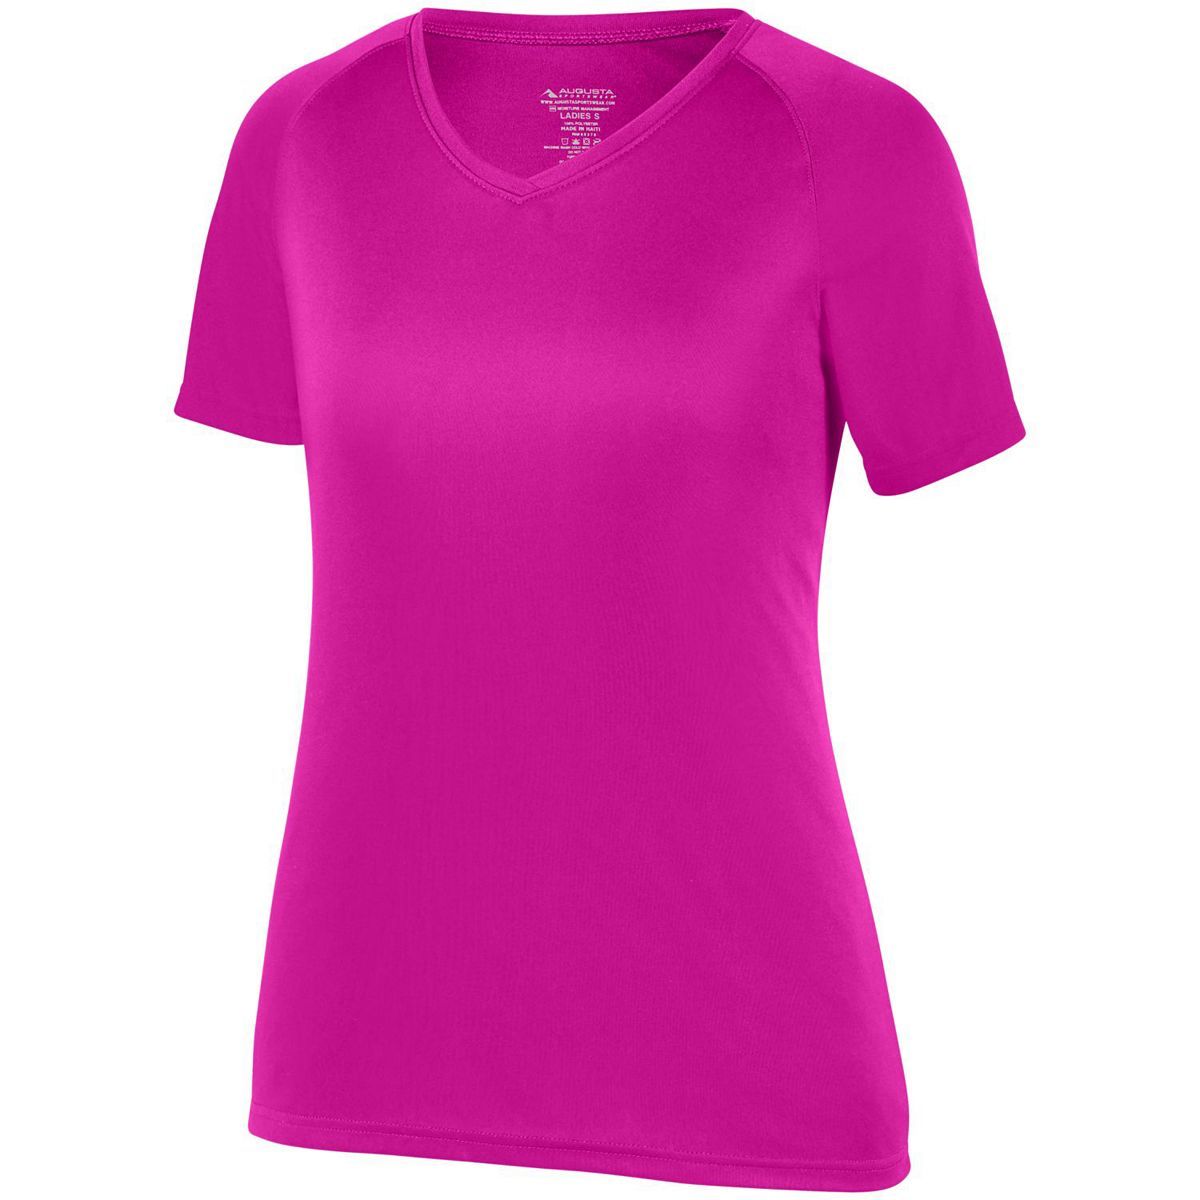 Augusta Sportswear Girls Attain Wicking Raglan Sleeve Tee in Power Pink  -Part of the Girls, T-Shirts, Augusta-Products, Girls-Tee-Shirt, Shirts product lines at KanaleyCreations.com